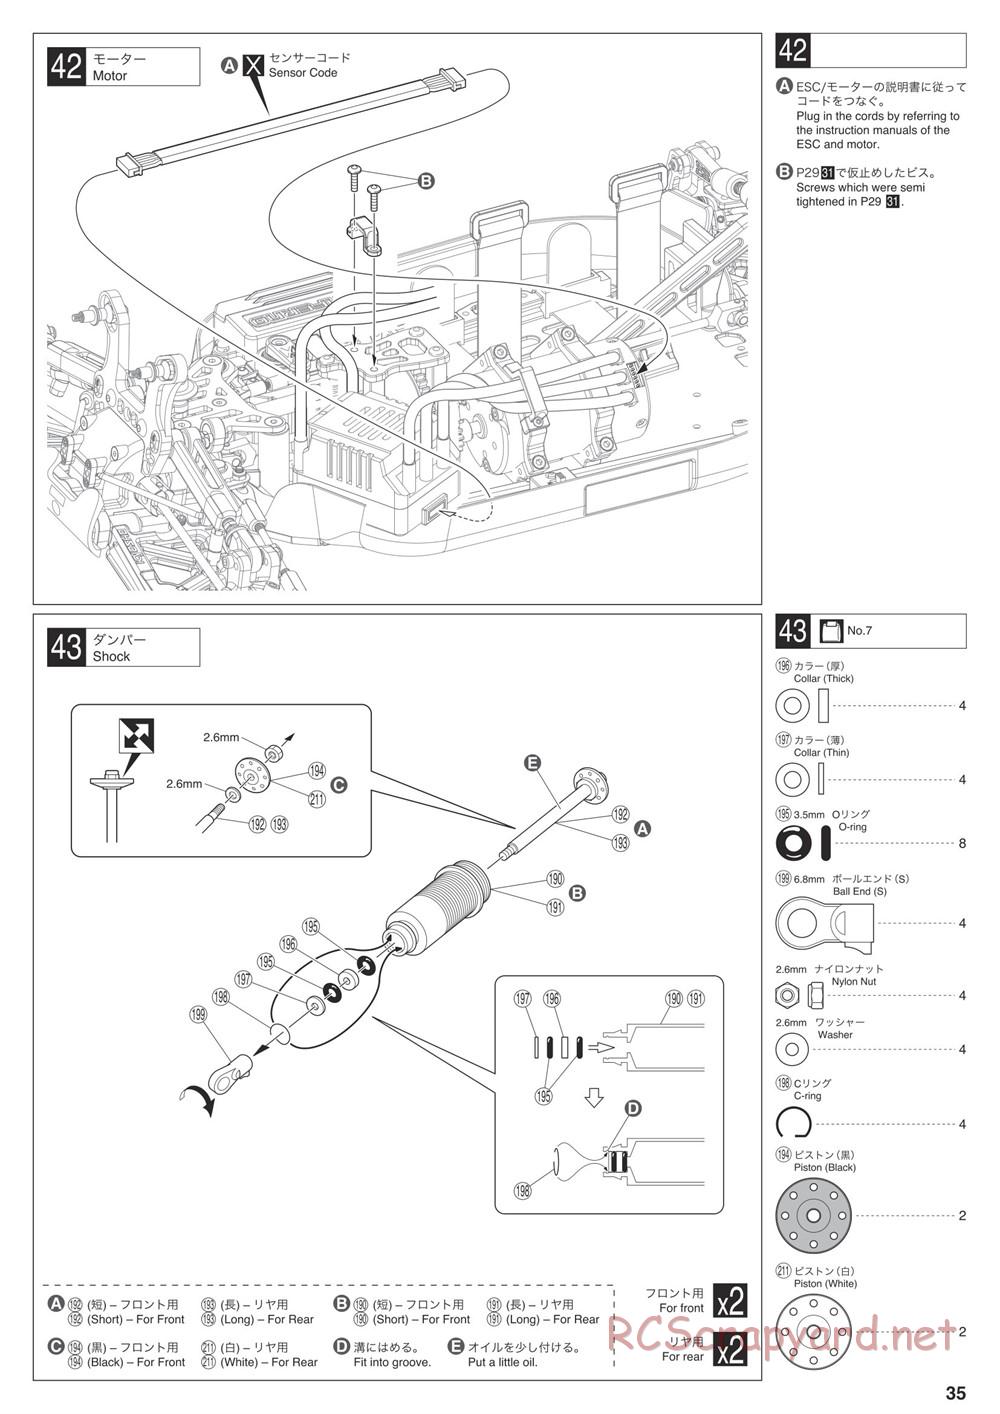 Kyosho - Inferno MP9e Evo - Manual - Page 35